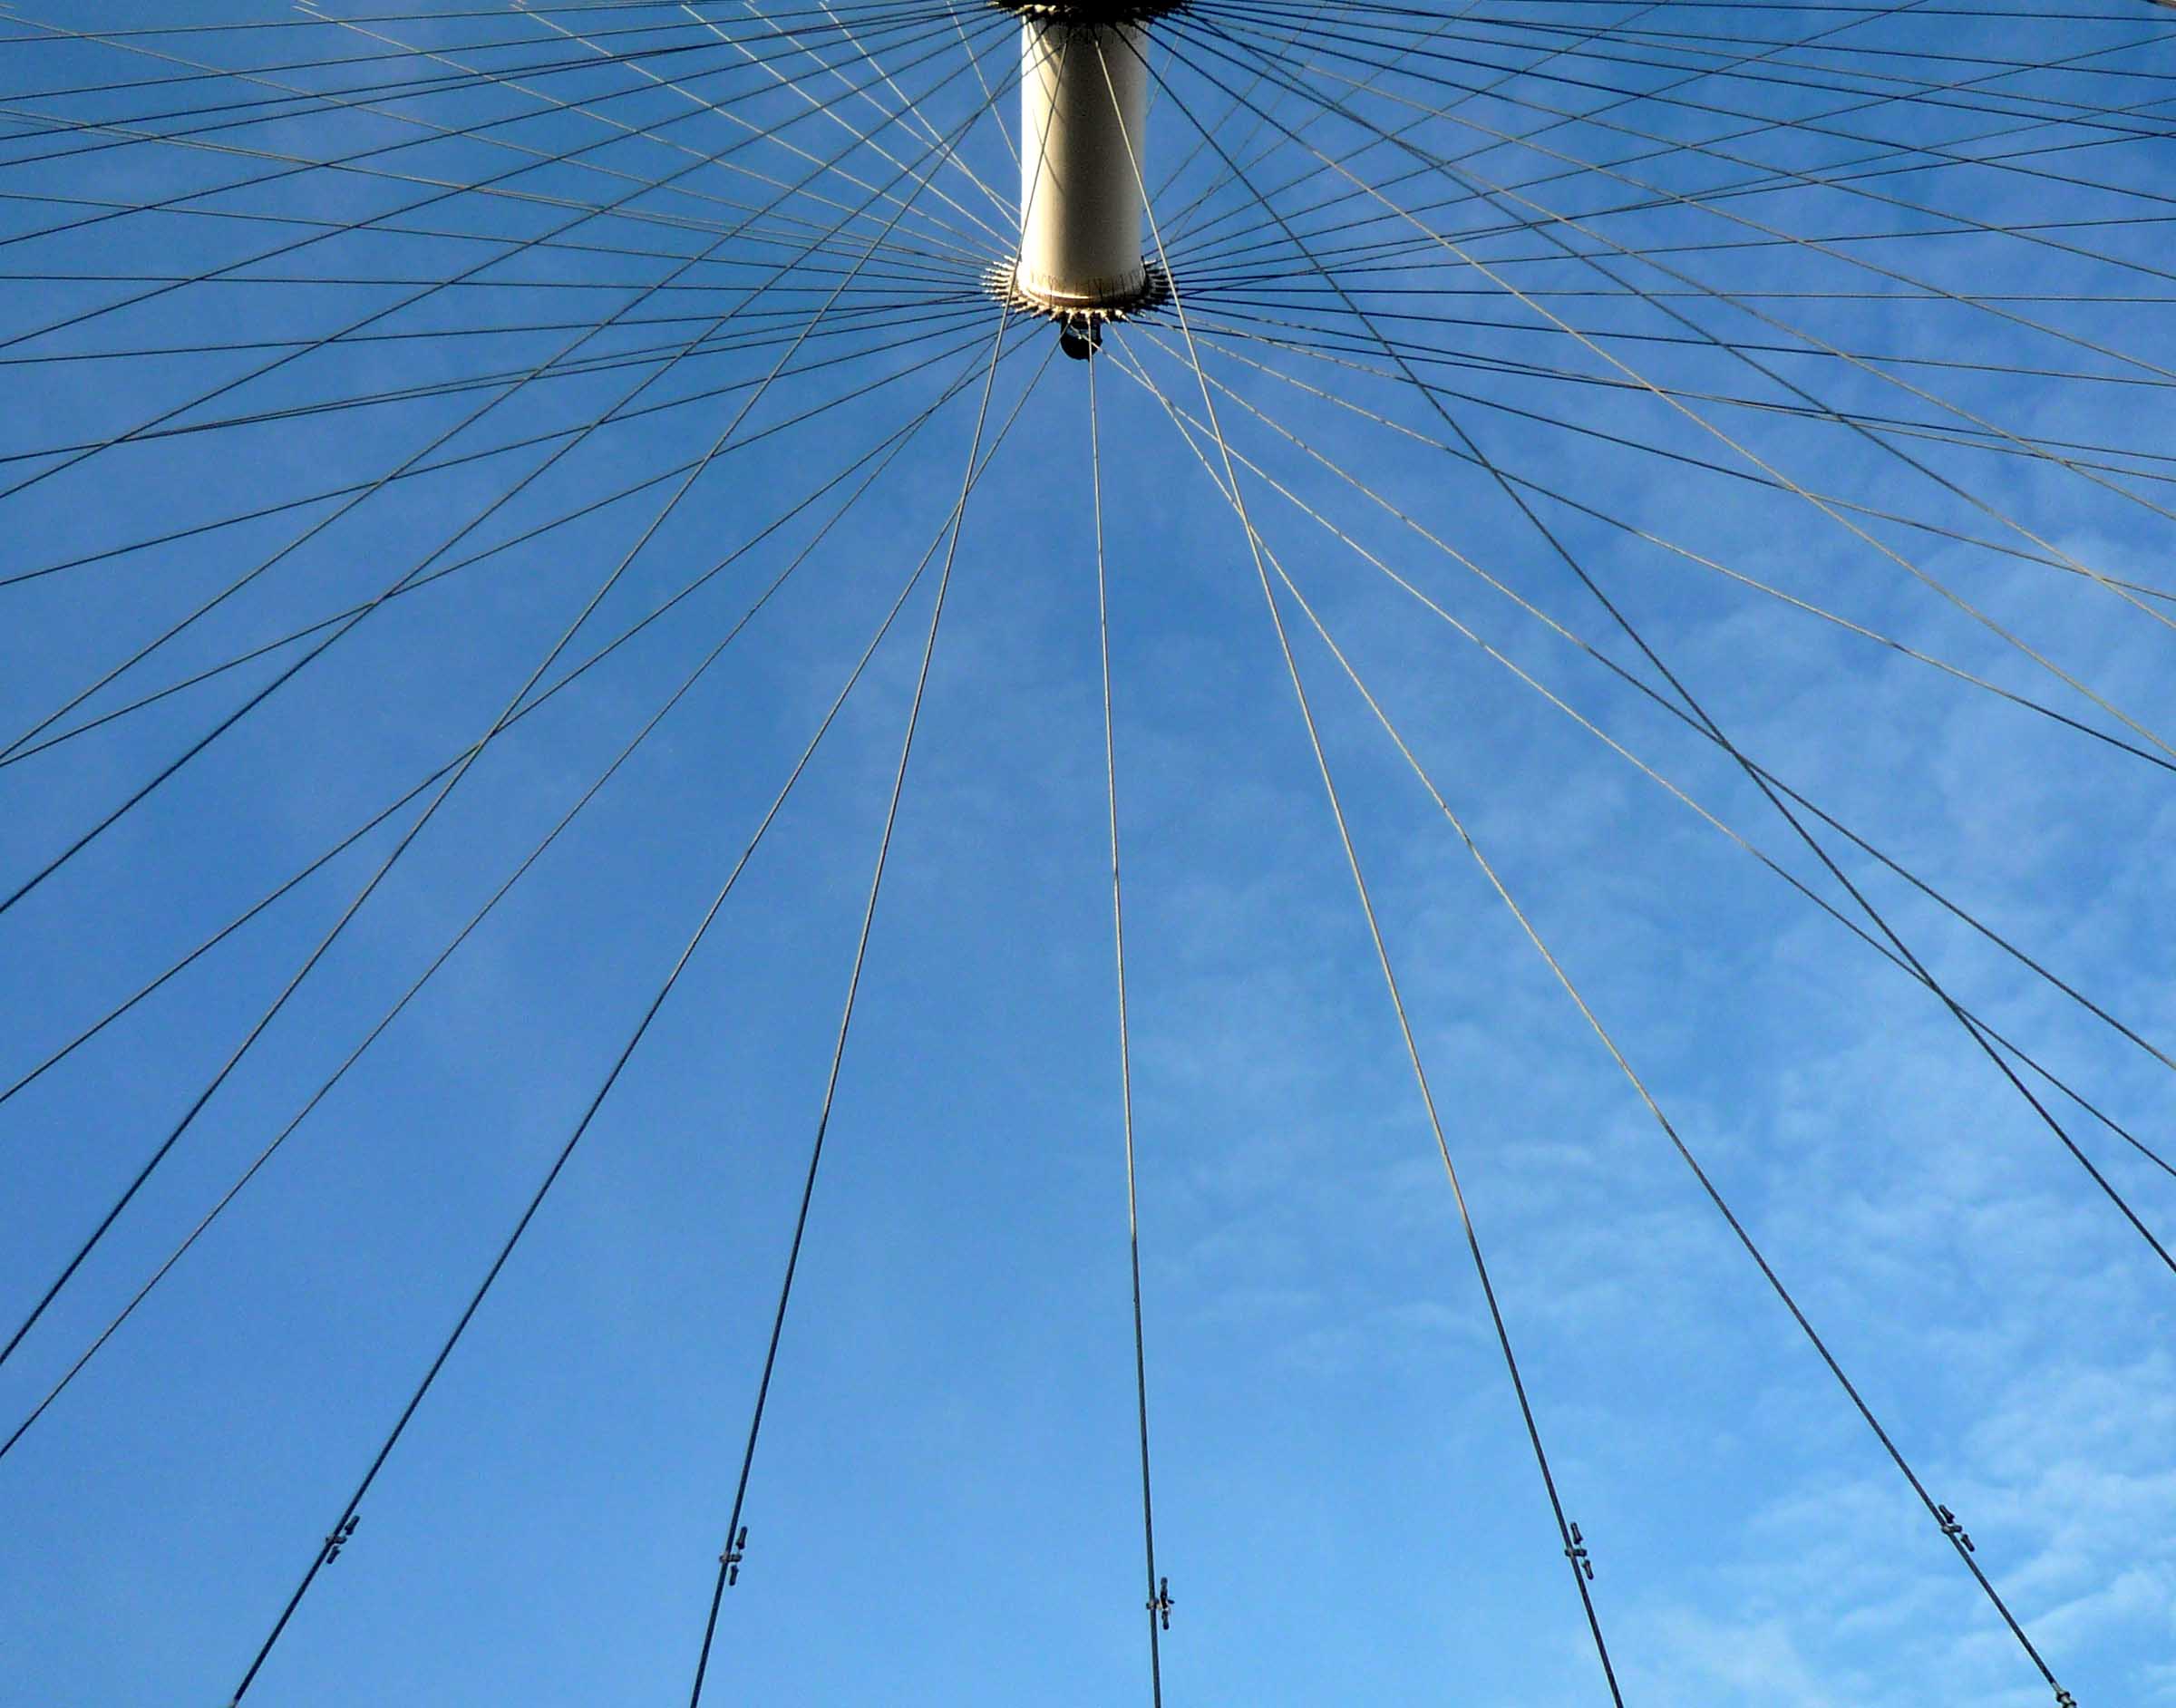  London Eye 